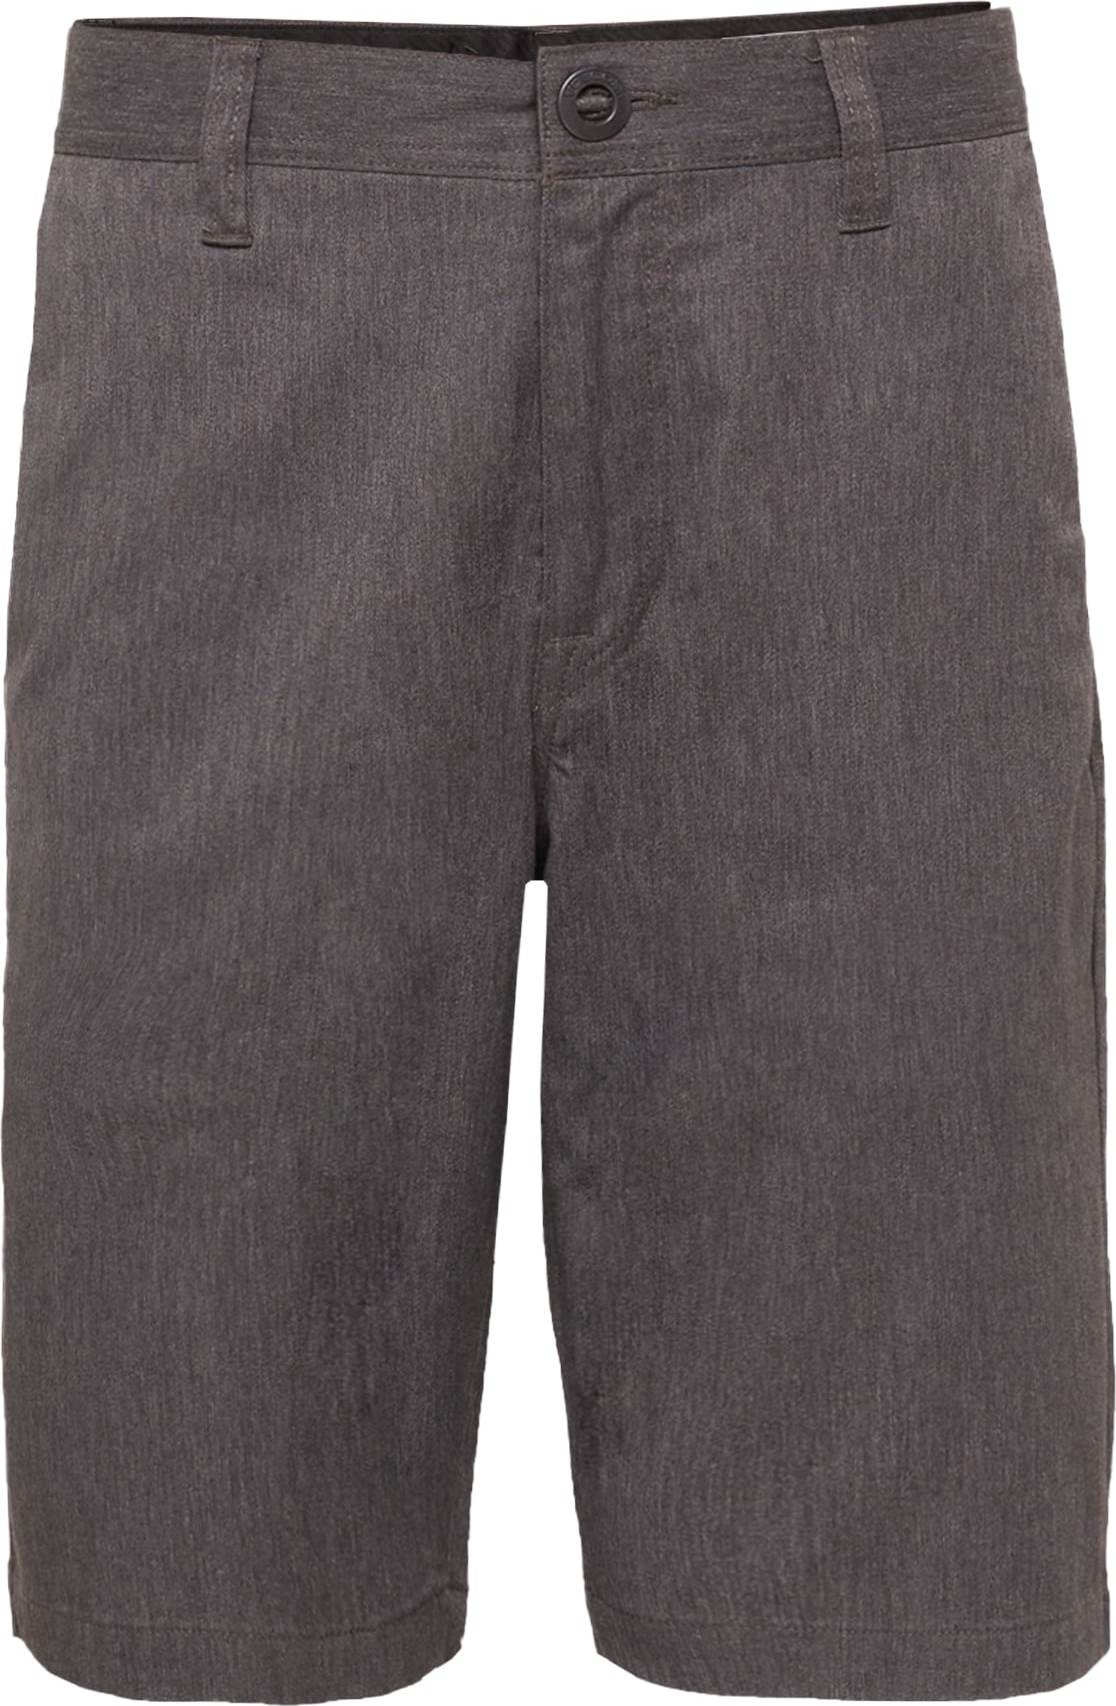 Volcom Chino kalhoty tmavě šedá